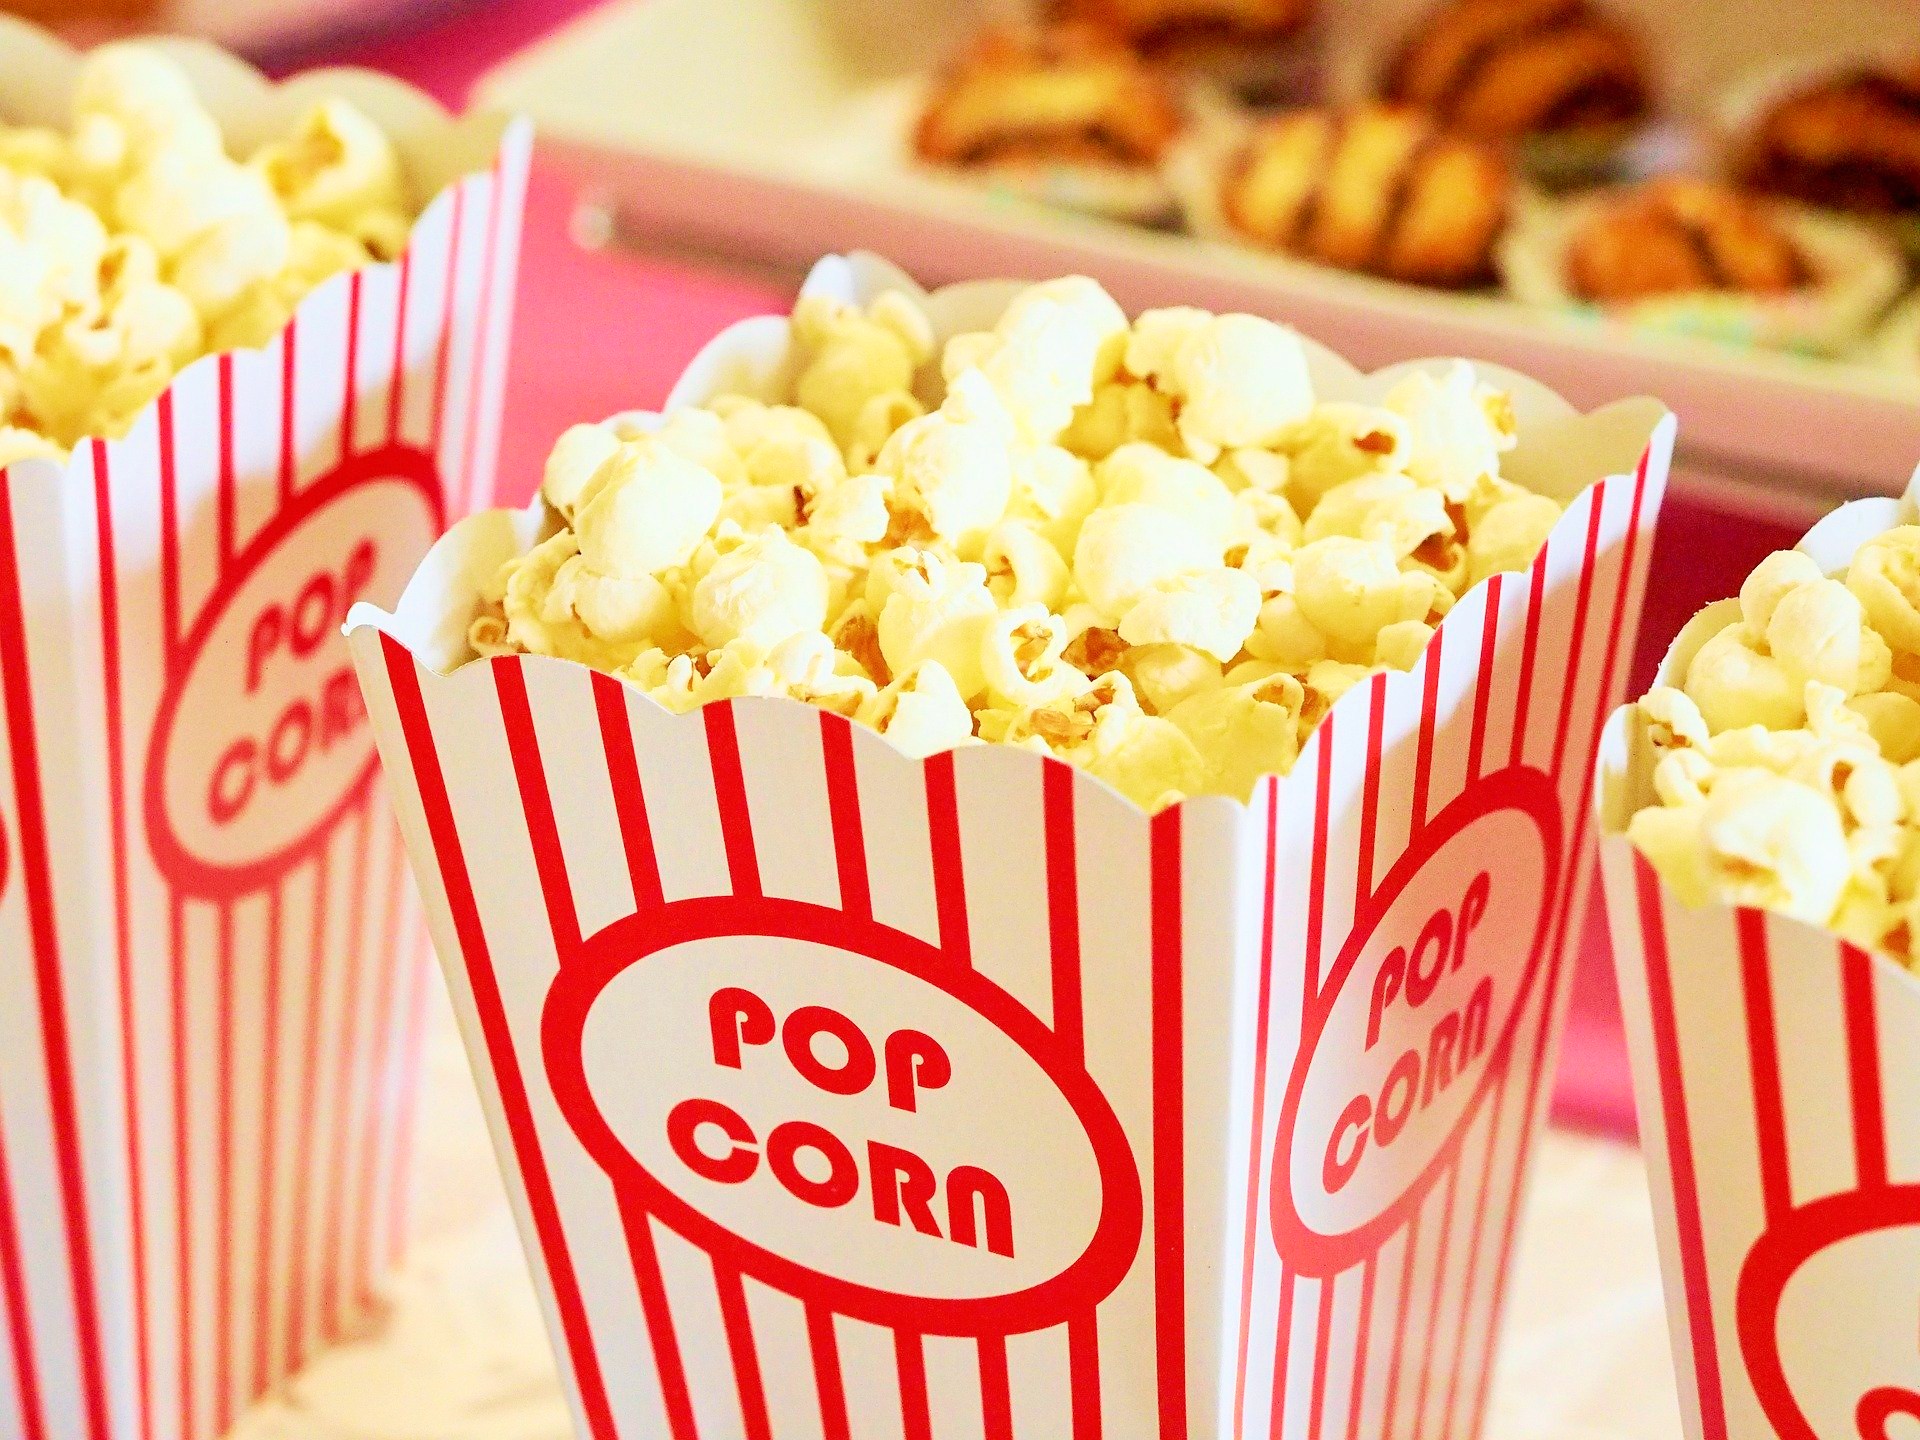 <img src="popcorn.jpg" alt="popcorn movie date ideas for disabled people"/> 